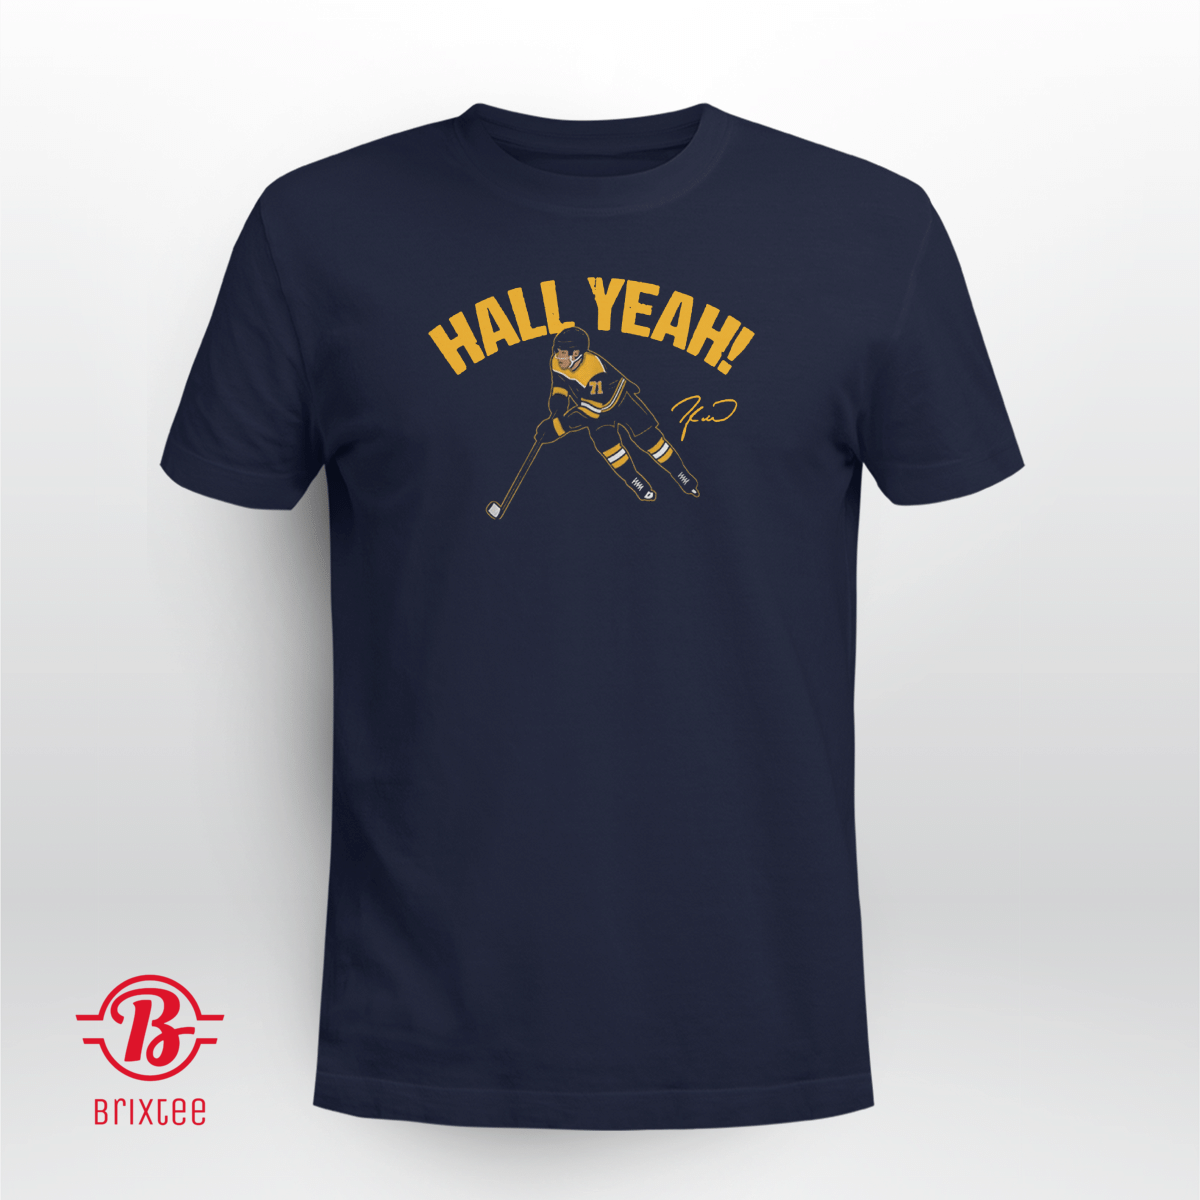 Taylor Hall Hall Yeah! | Boston Bruins